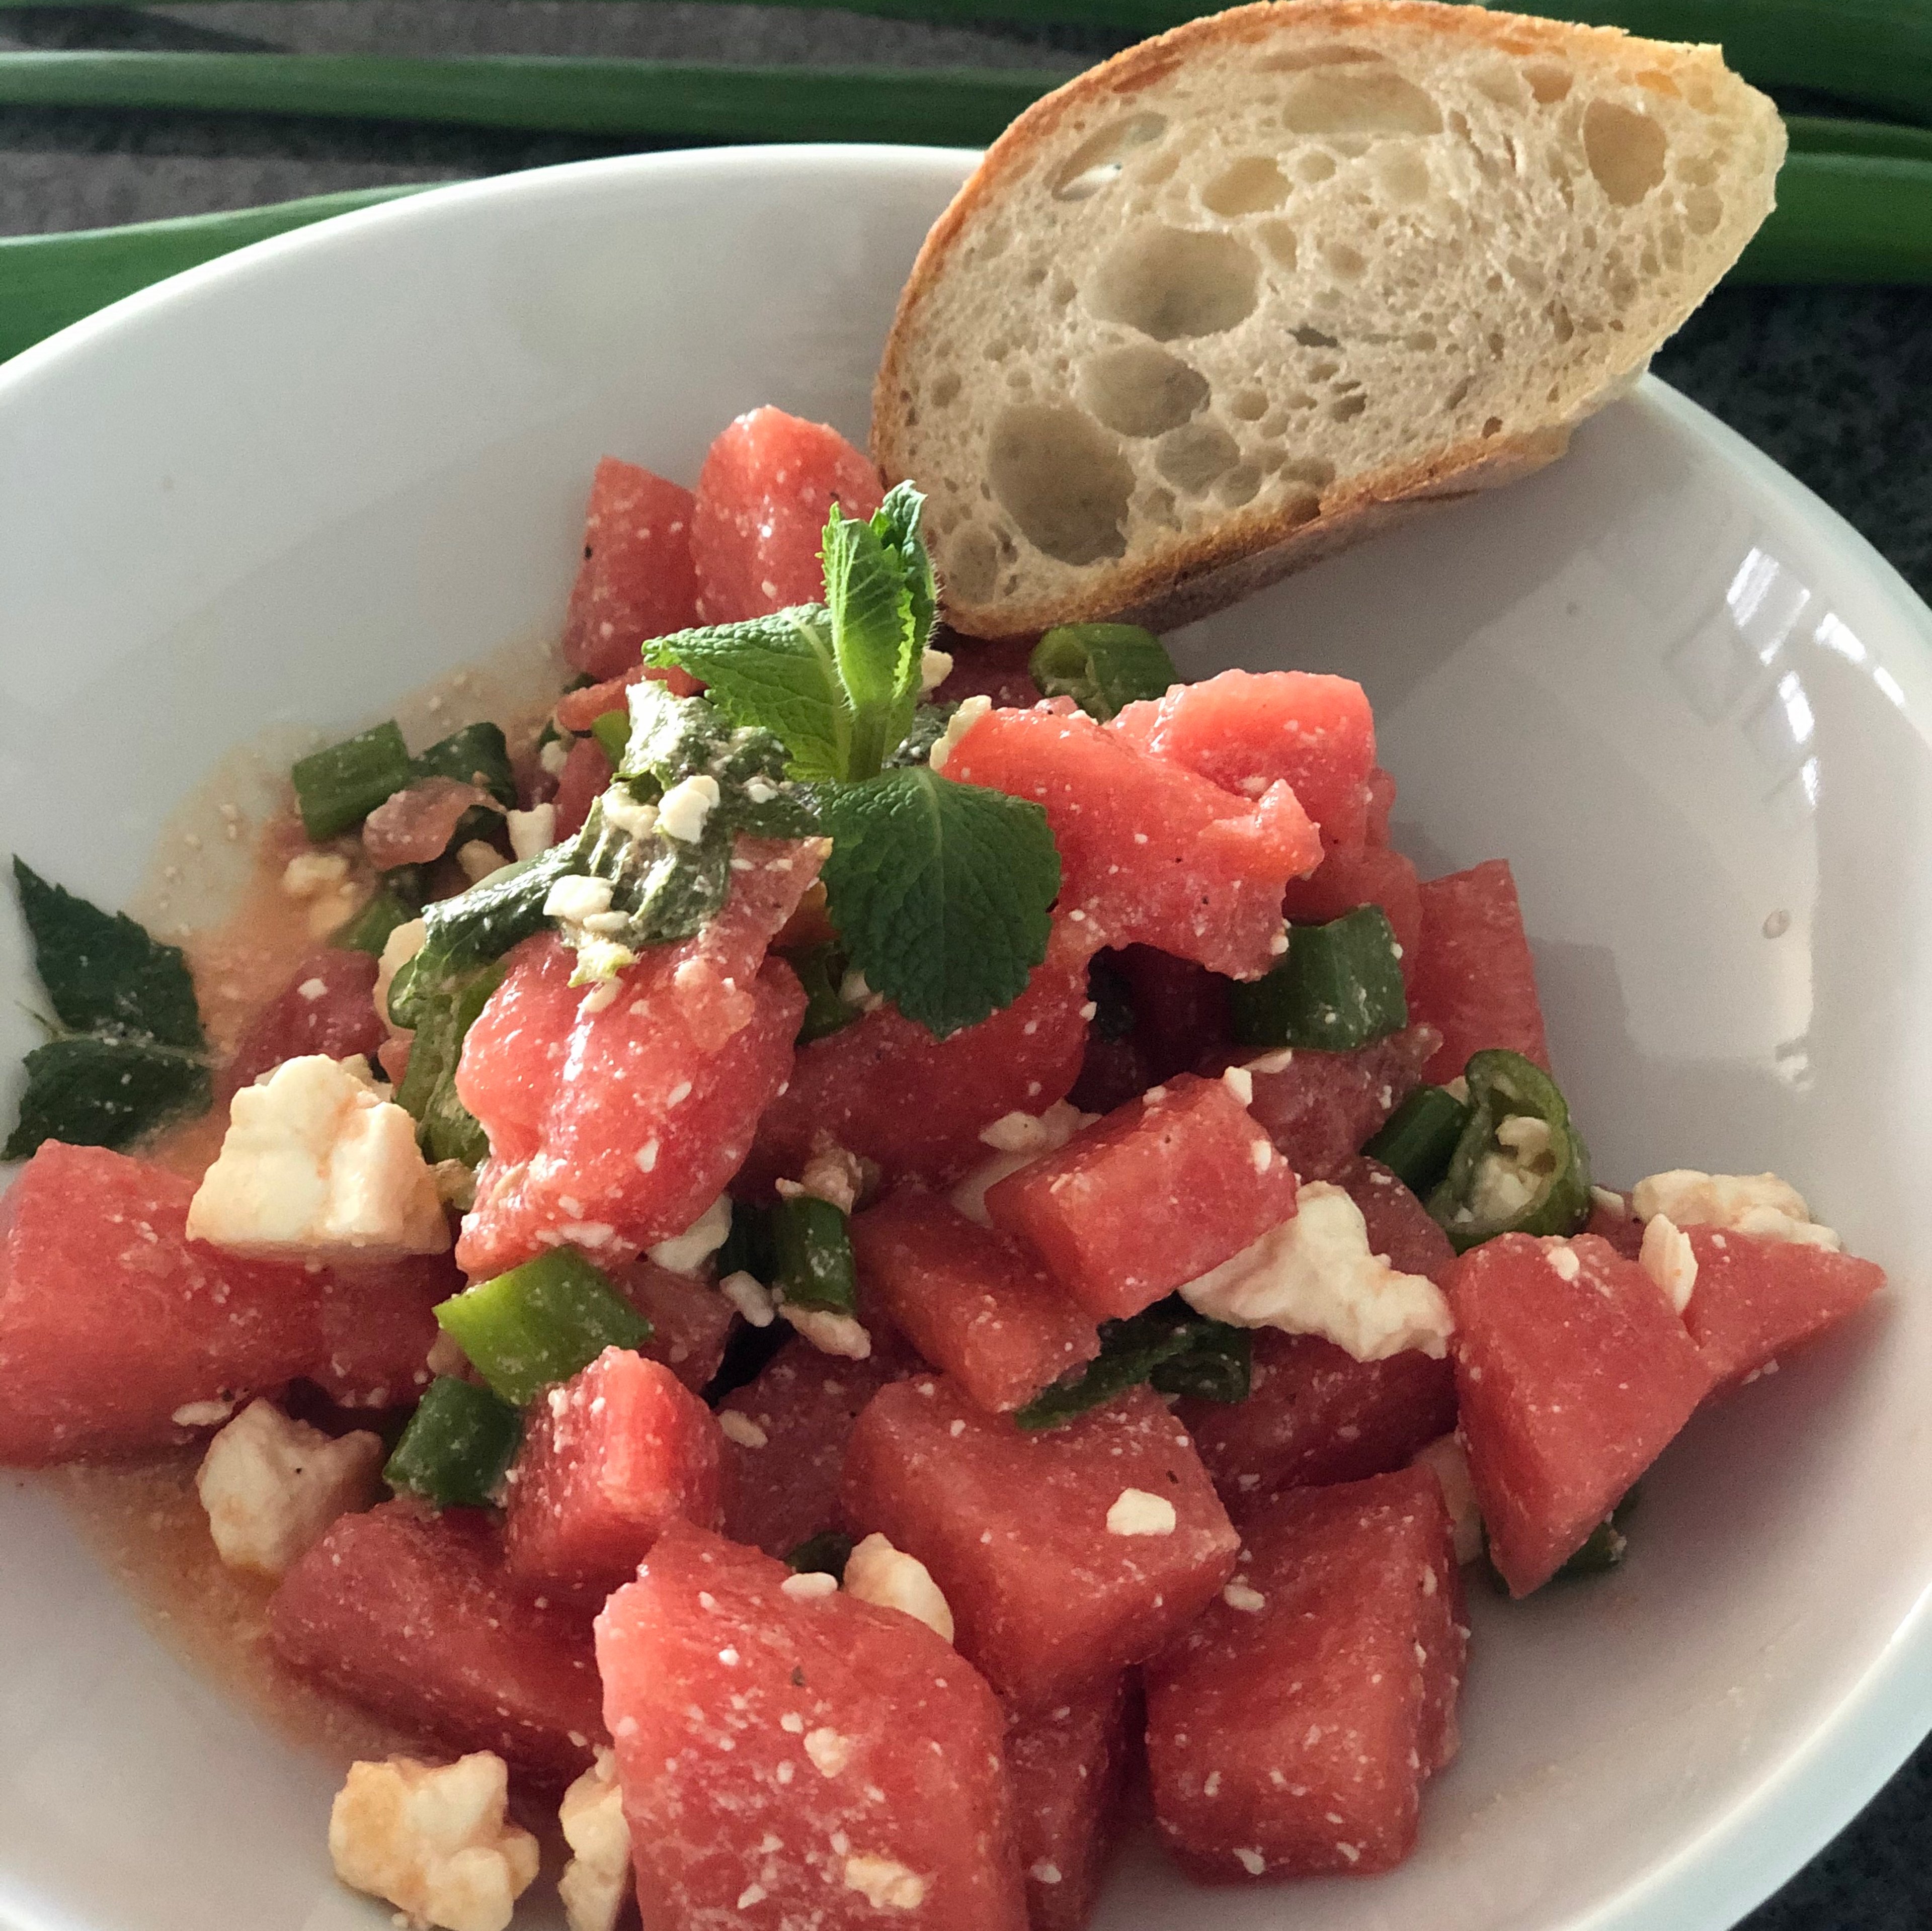 Watermelon-Feta Salad